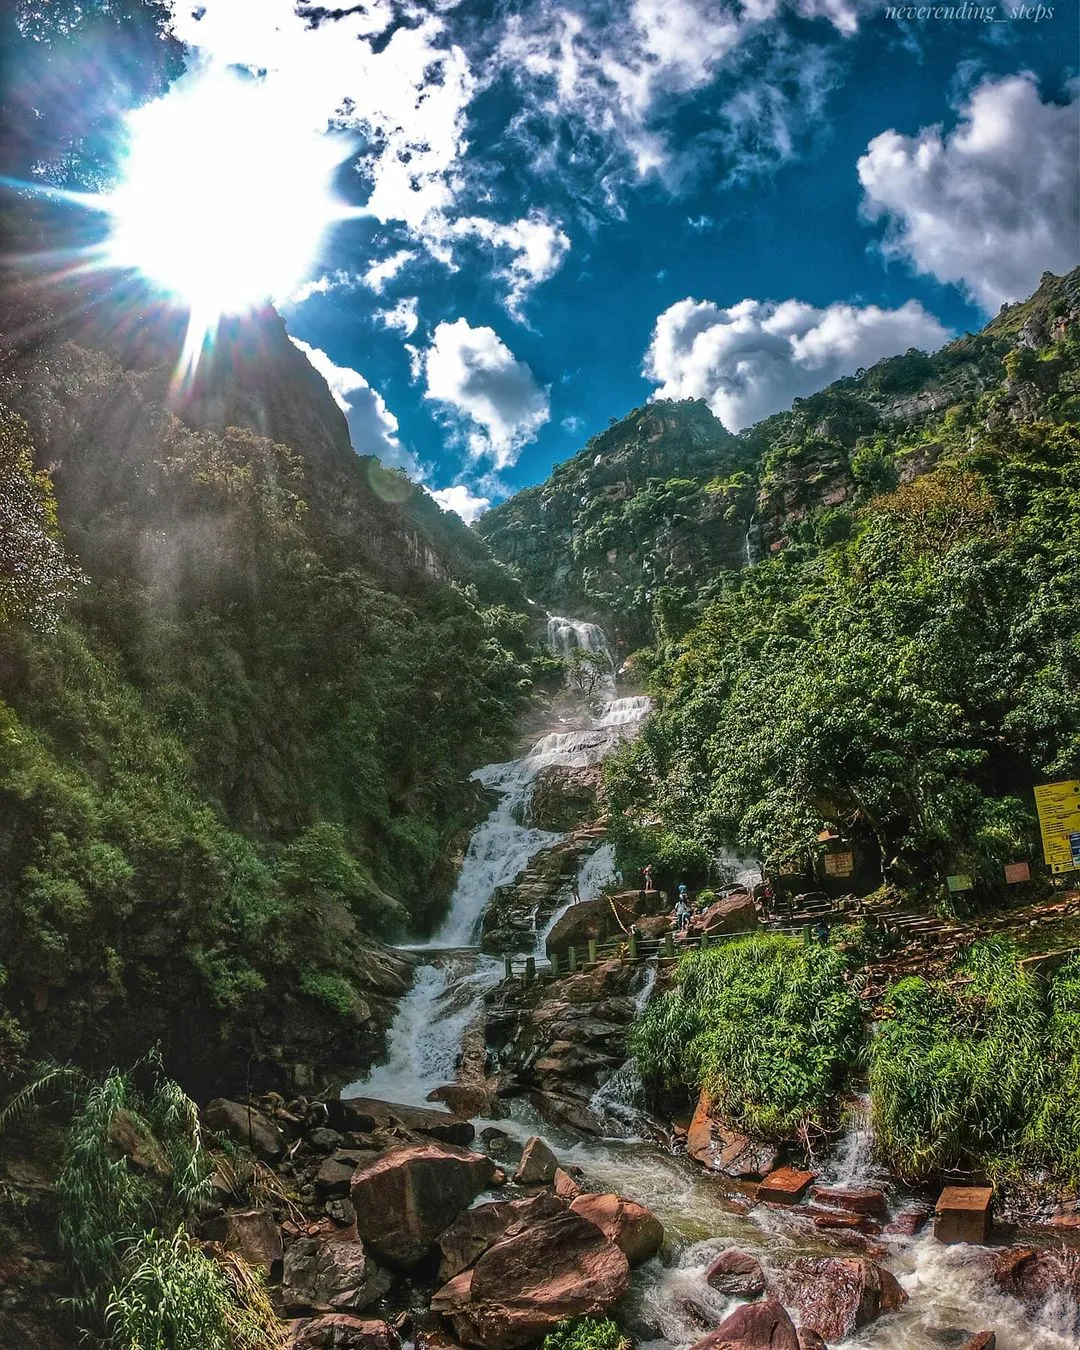 Ravana Falls in Ella, Sri Lanka